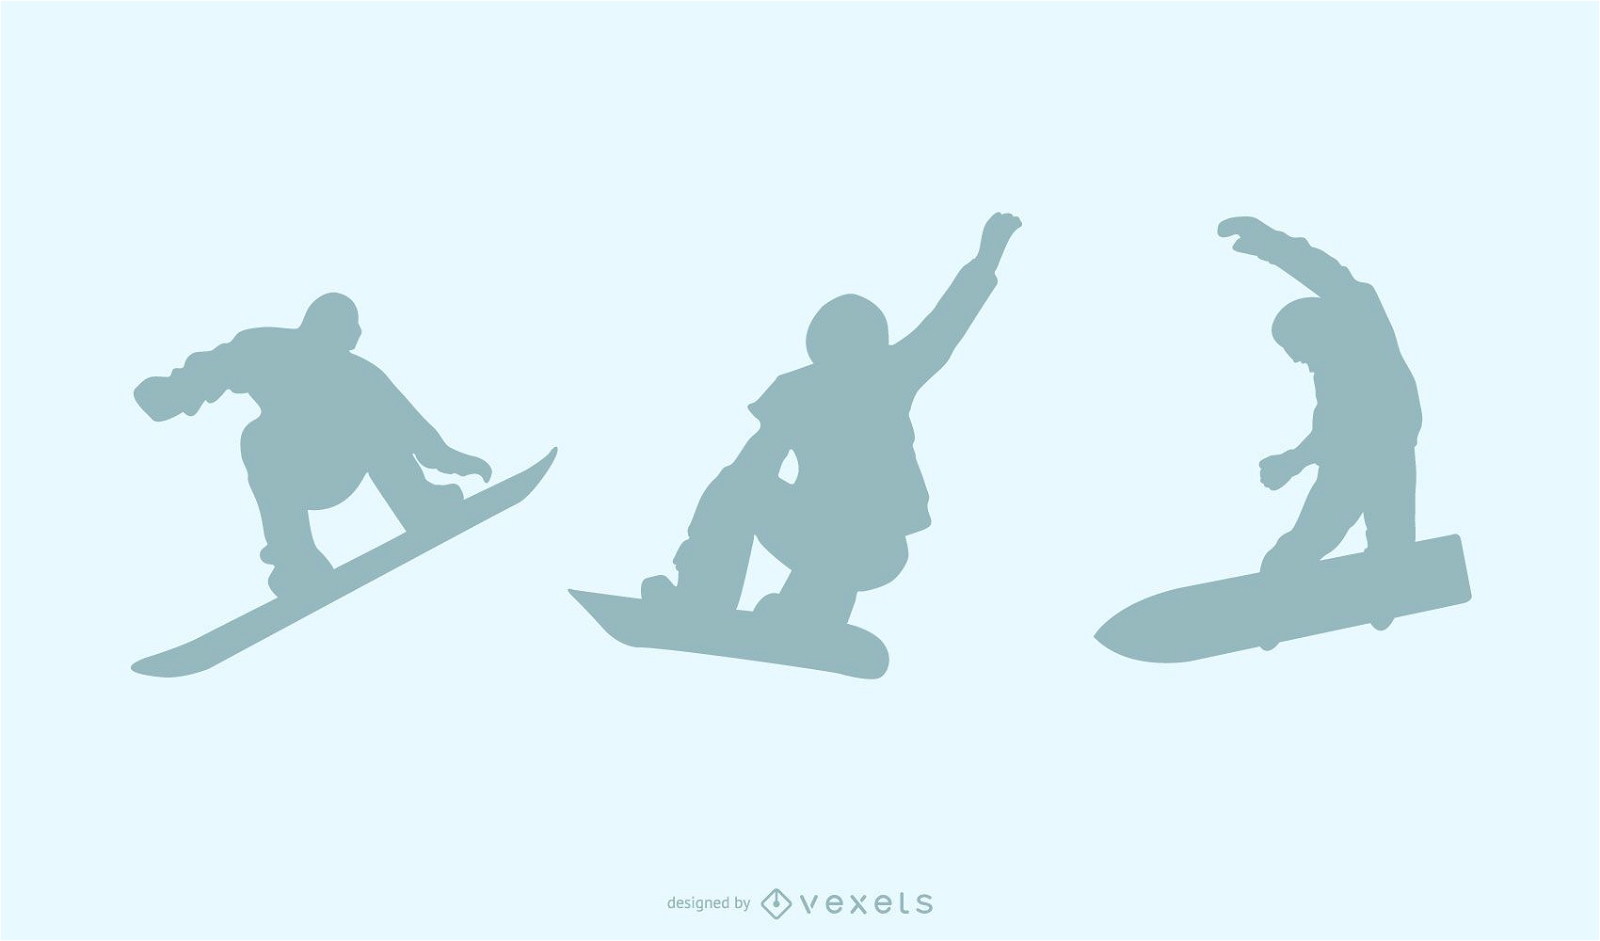 Snowboard silhouette set